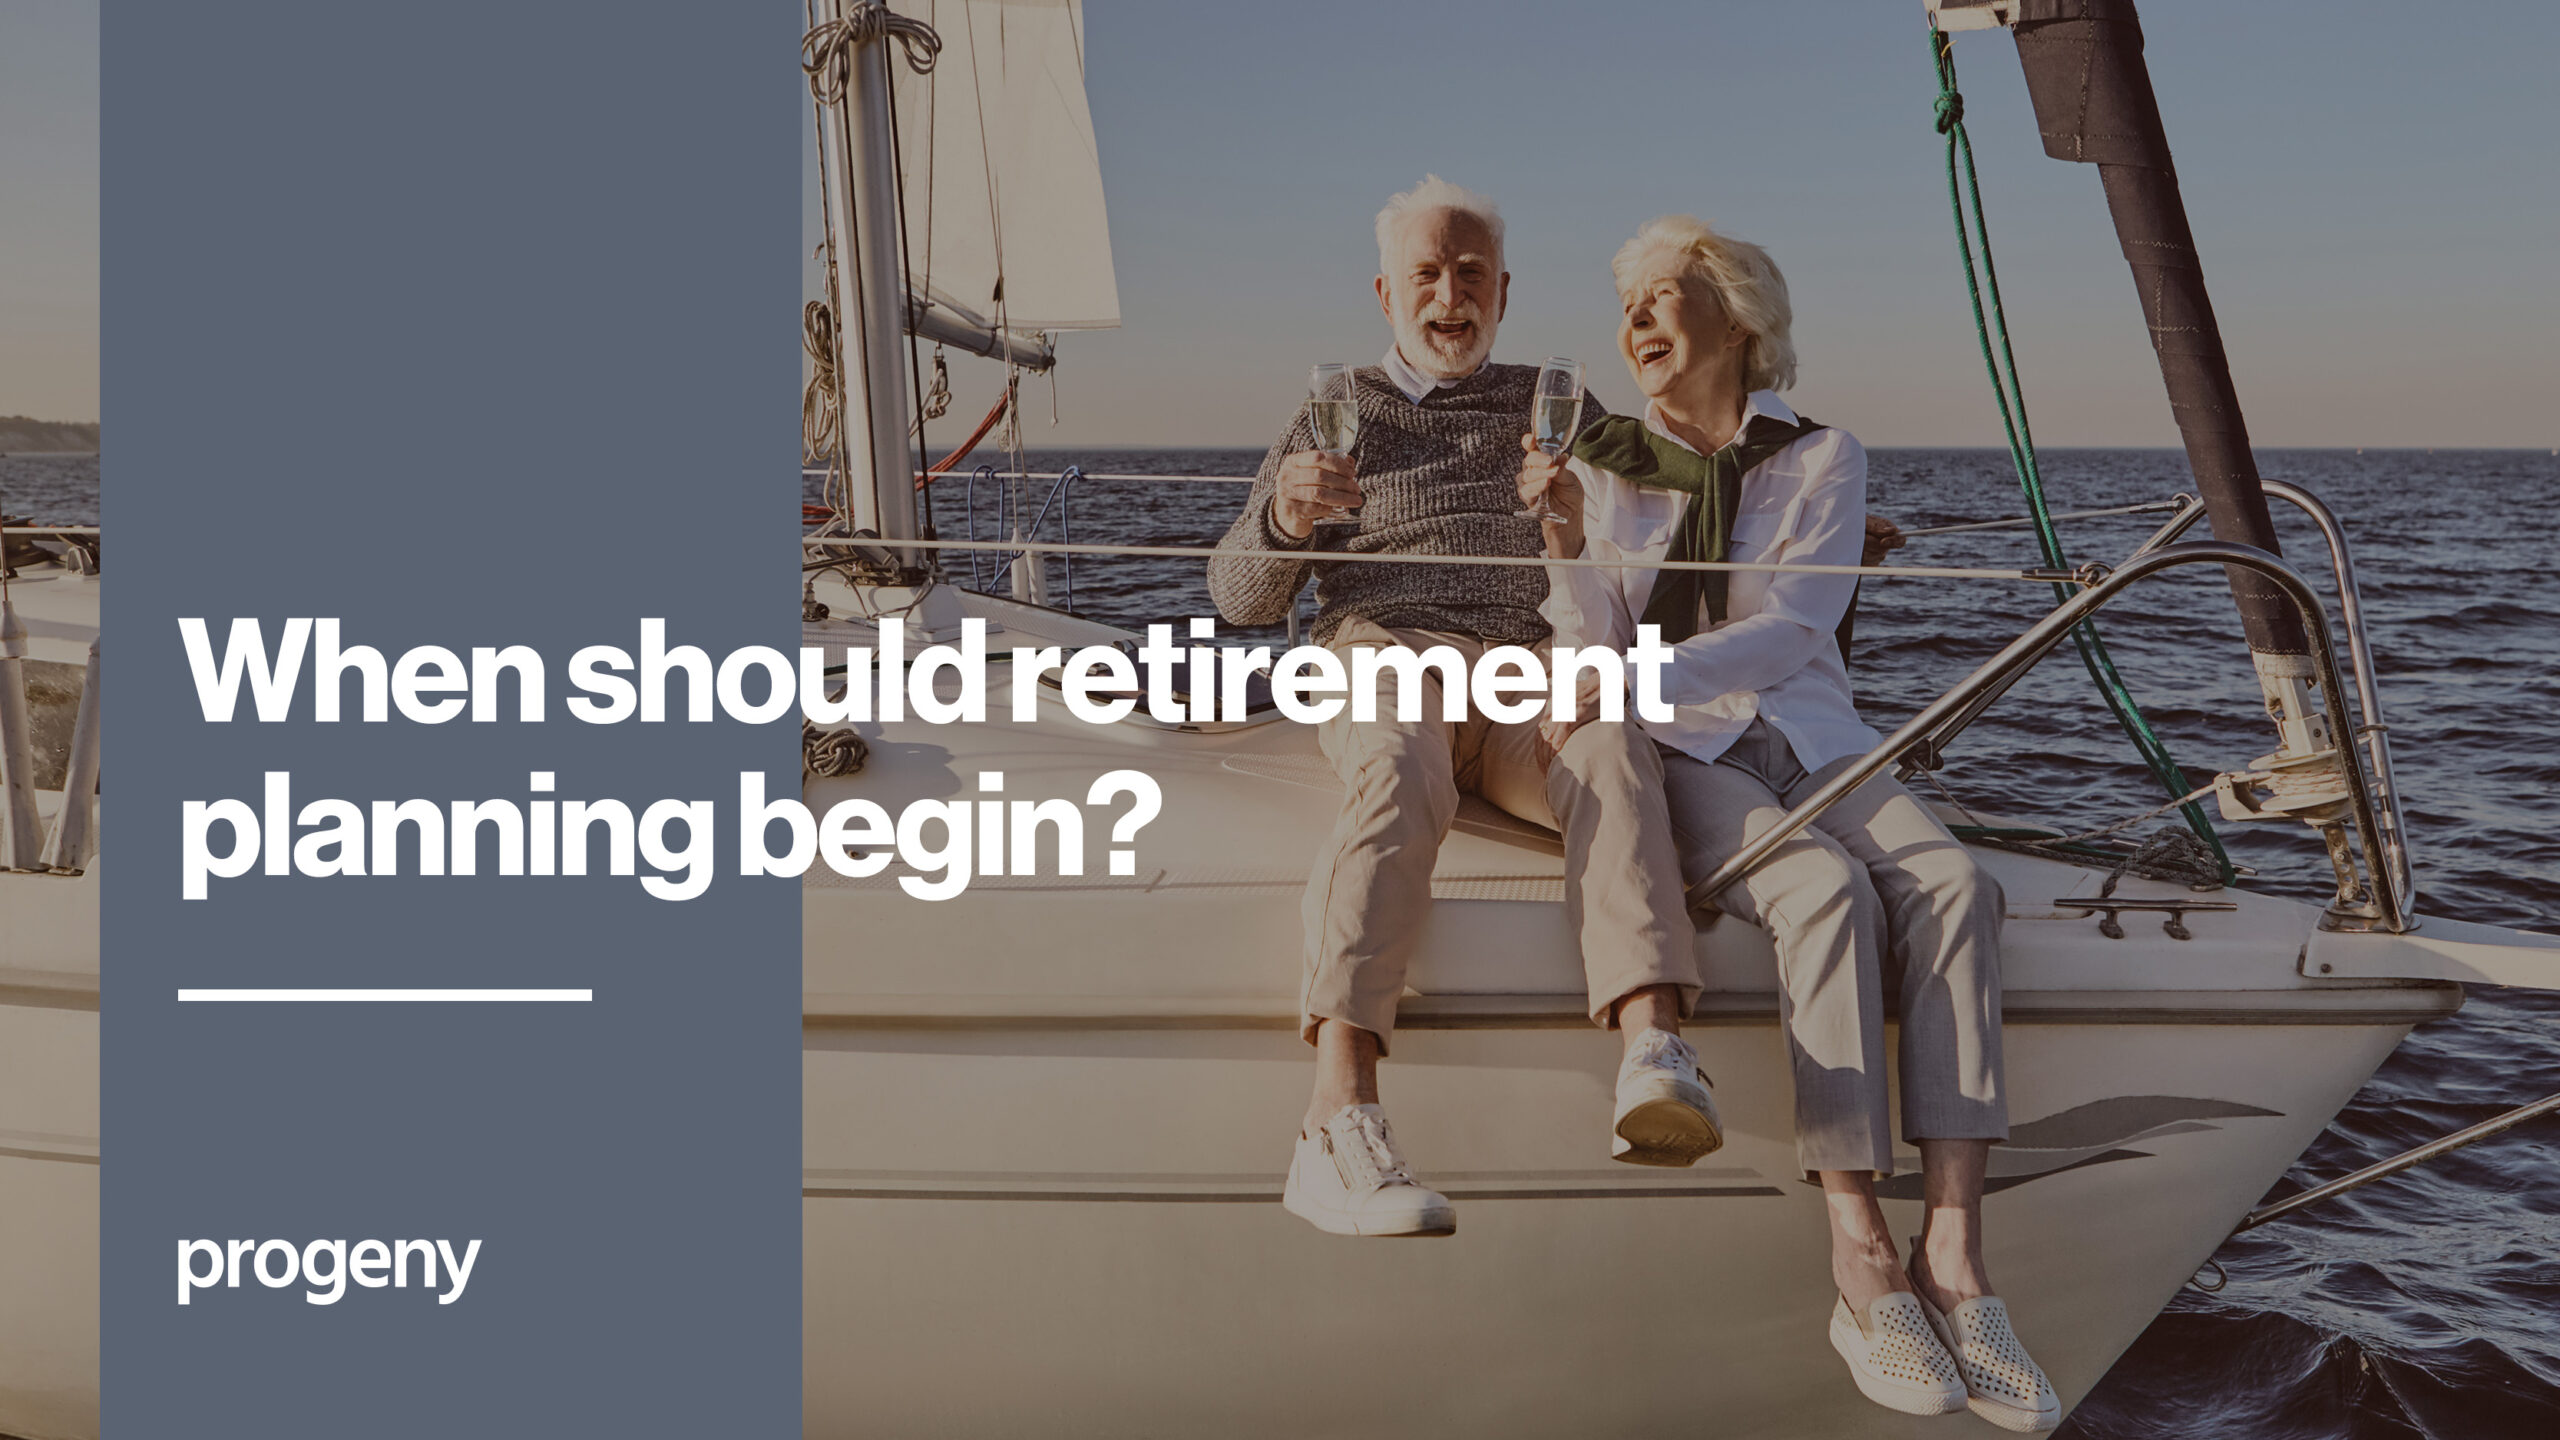 When should retirement planning begin?